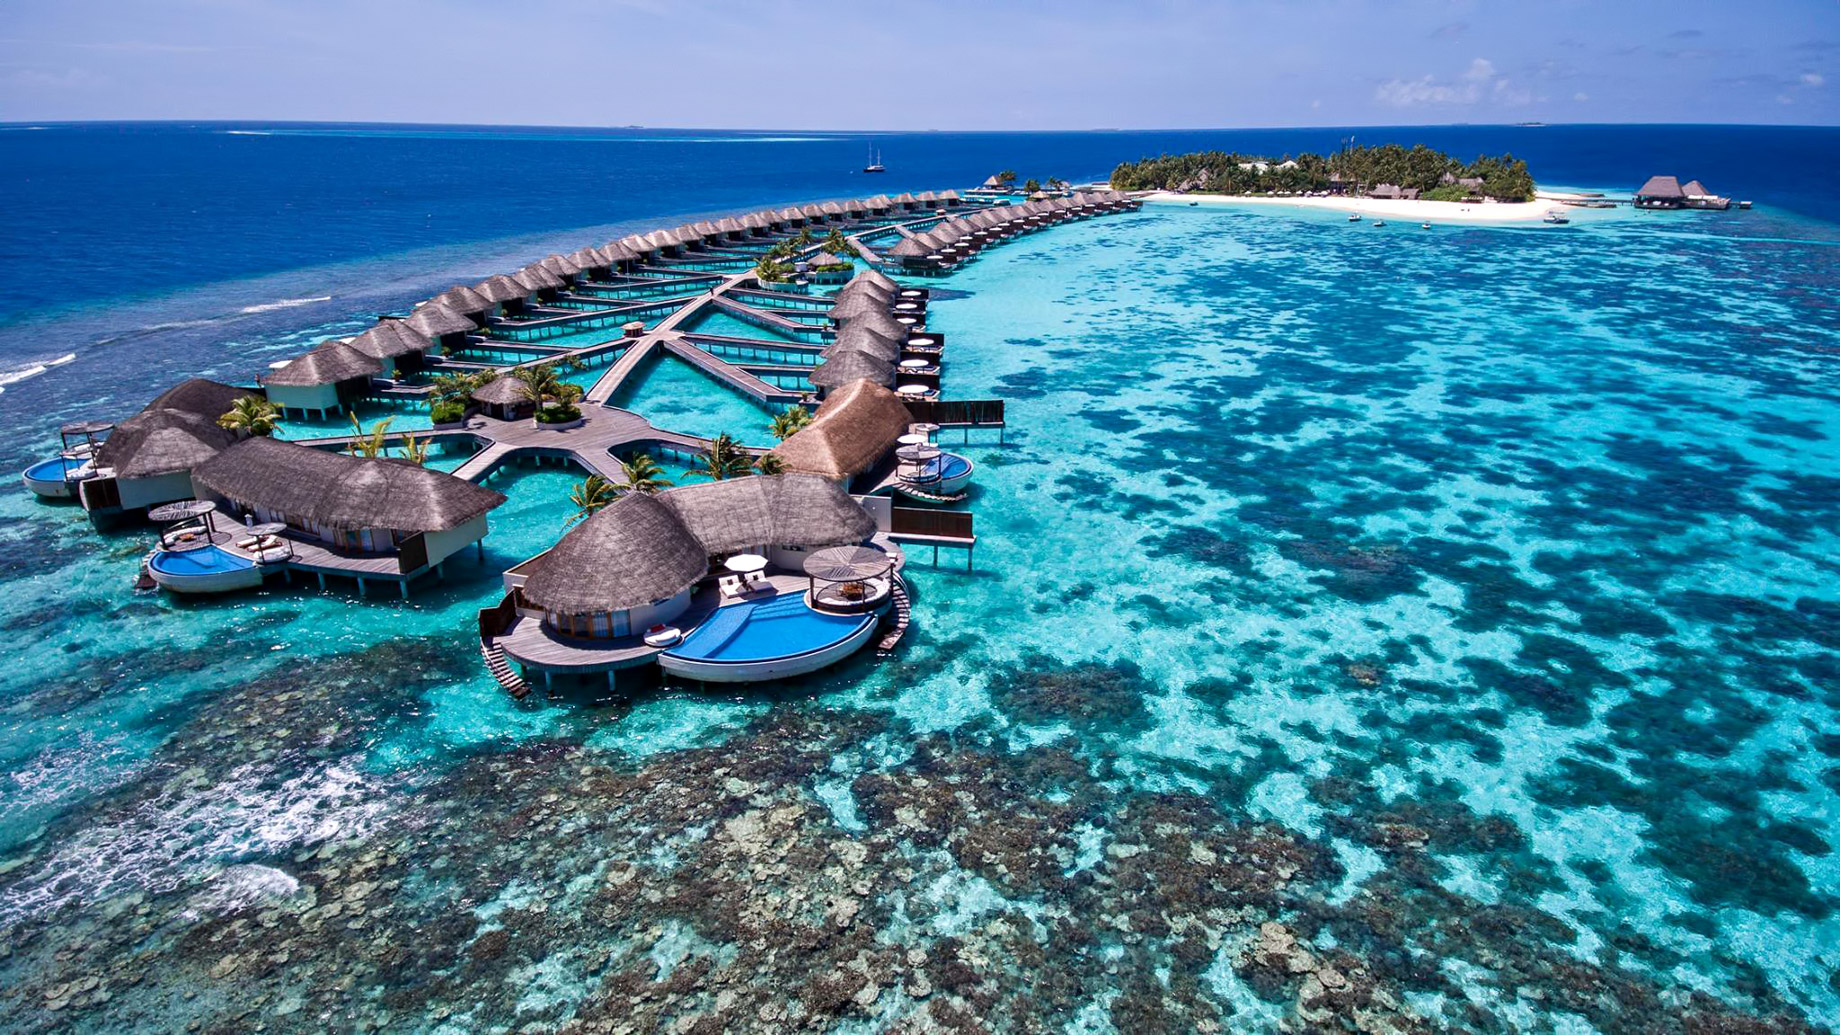 031 – W Maldives Resort – Fesdu Island, Maldives – Overwater Bungalows Aerial View